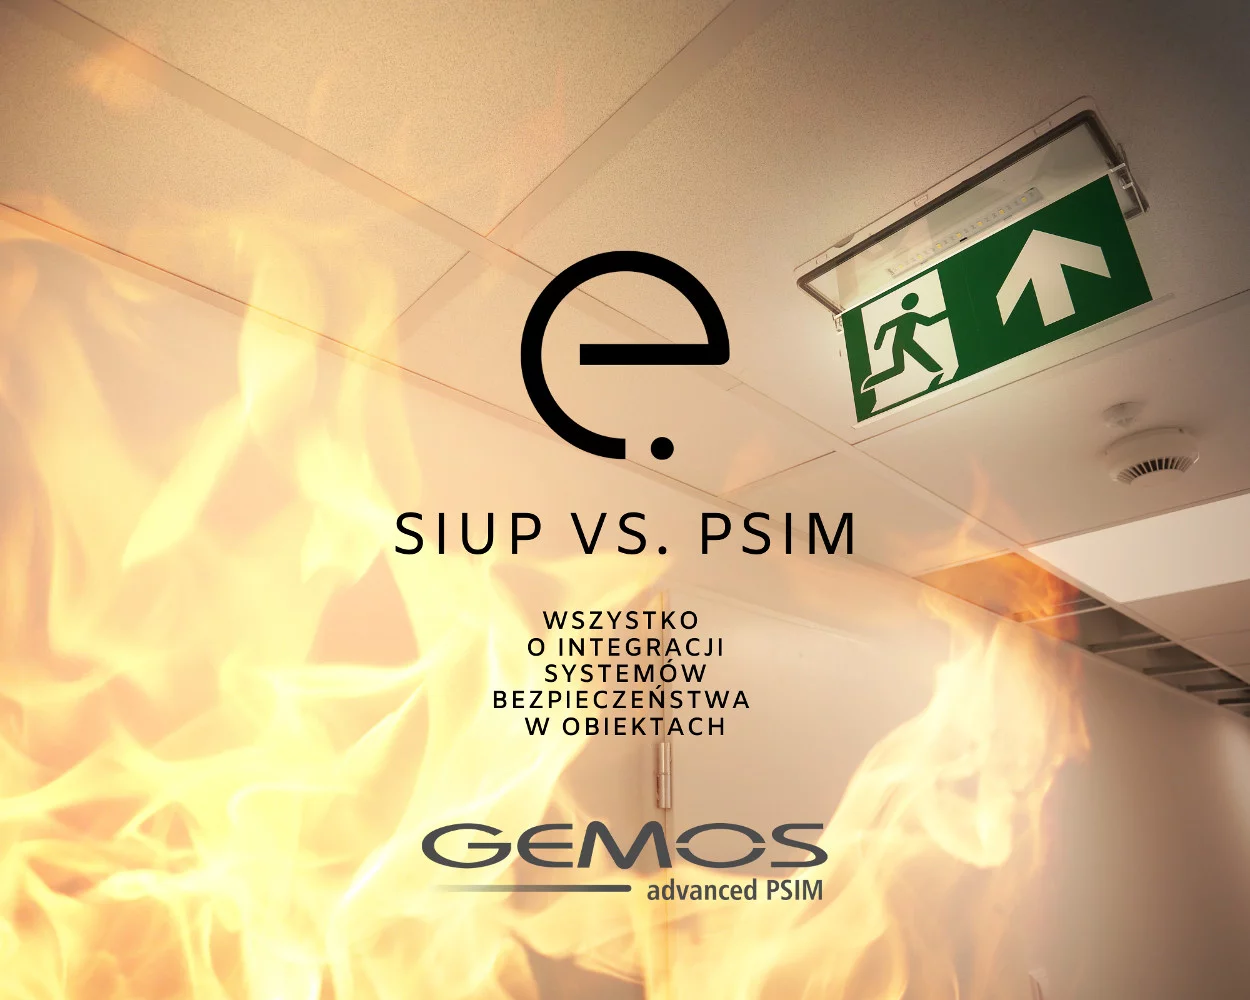 SIUP vs. PSIM - o integracji systemu GEMOS